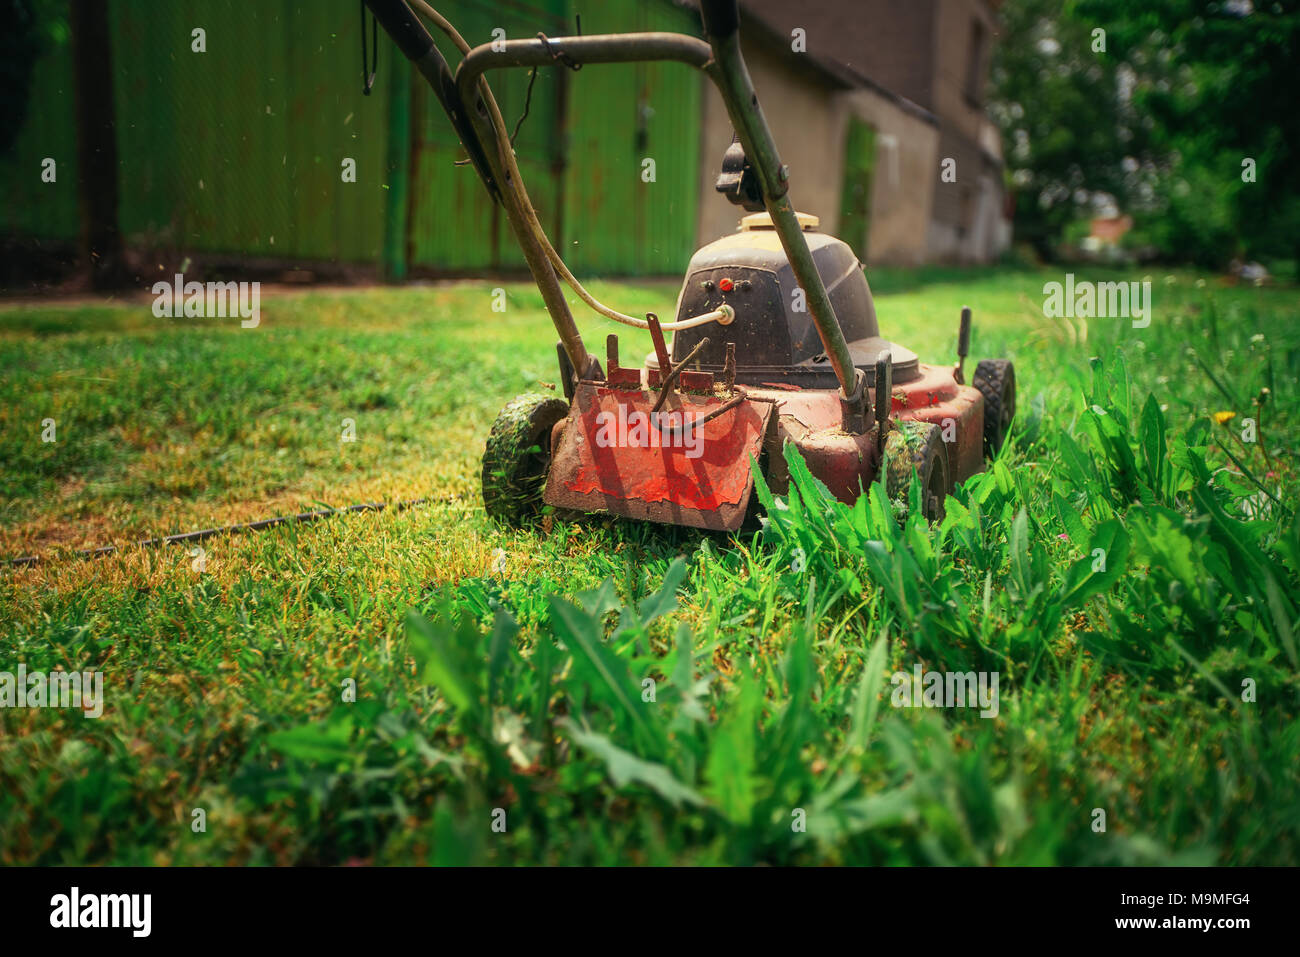 Lawn mower cutting green grass in backyard. Gardening background. Stock Photo